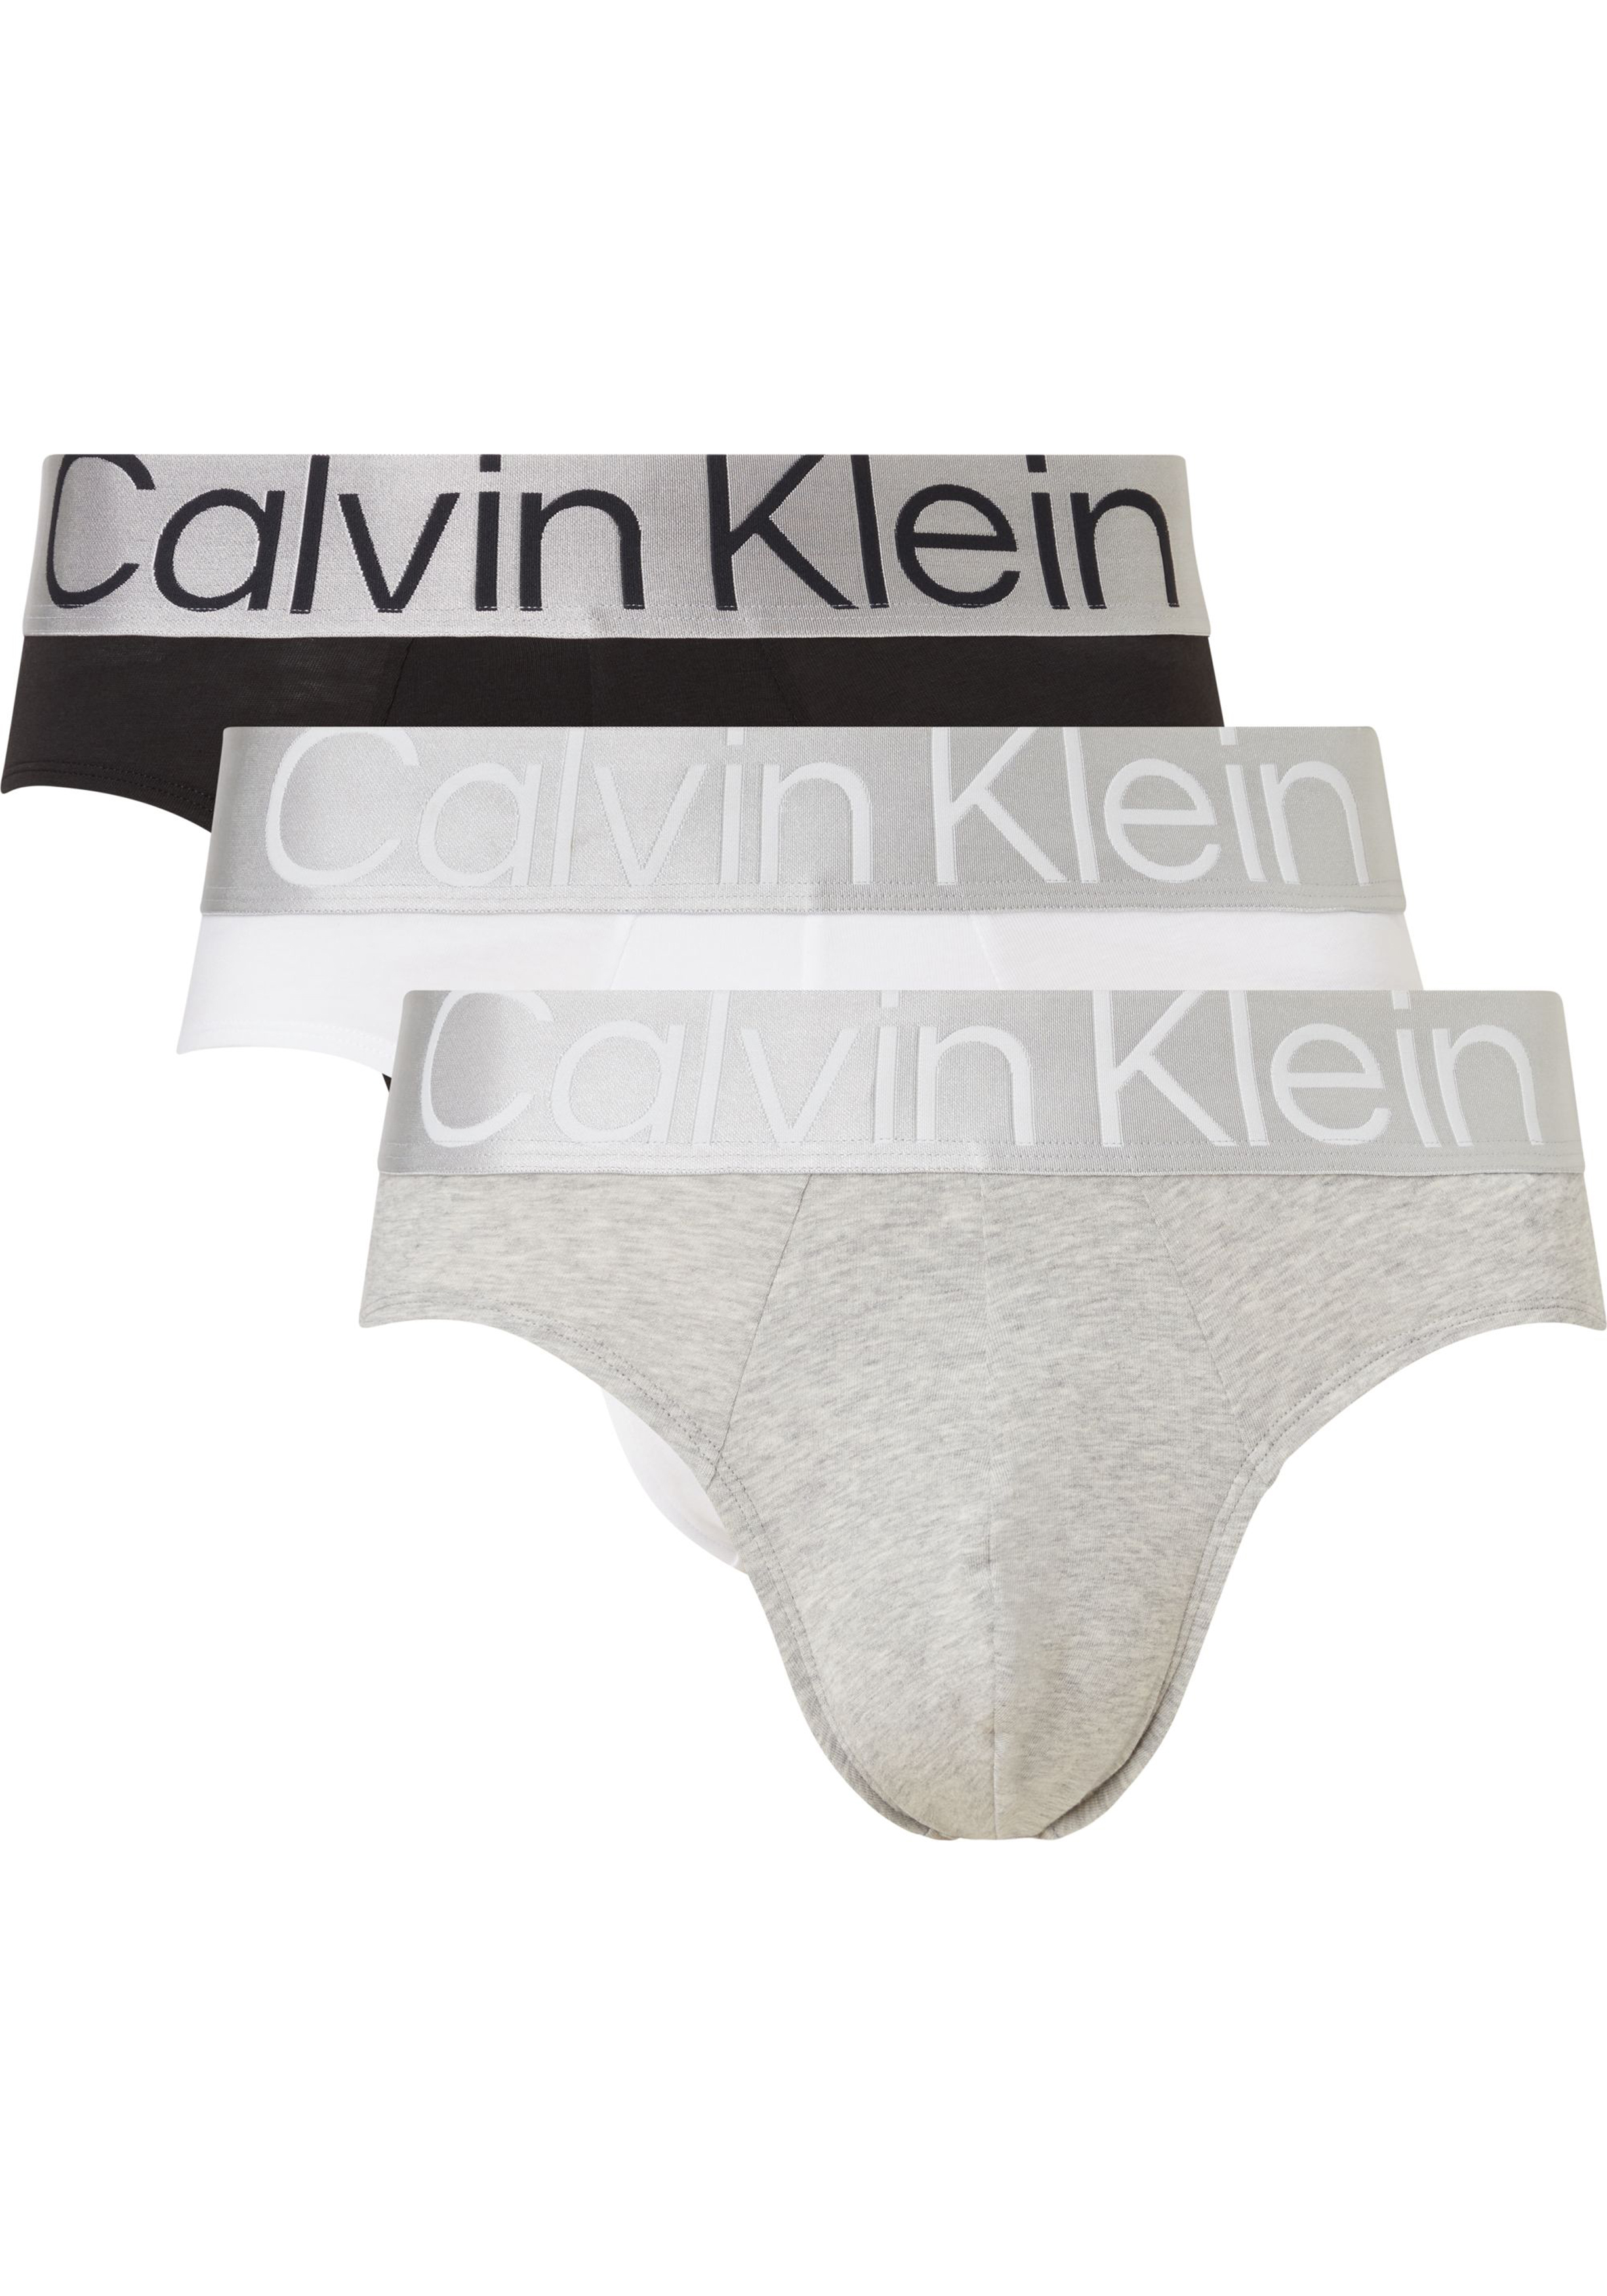 Calvin Klein Hipster Briefs (3-pack), heren slips, zwart, grijs en wit